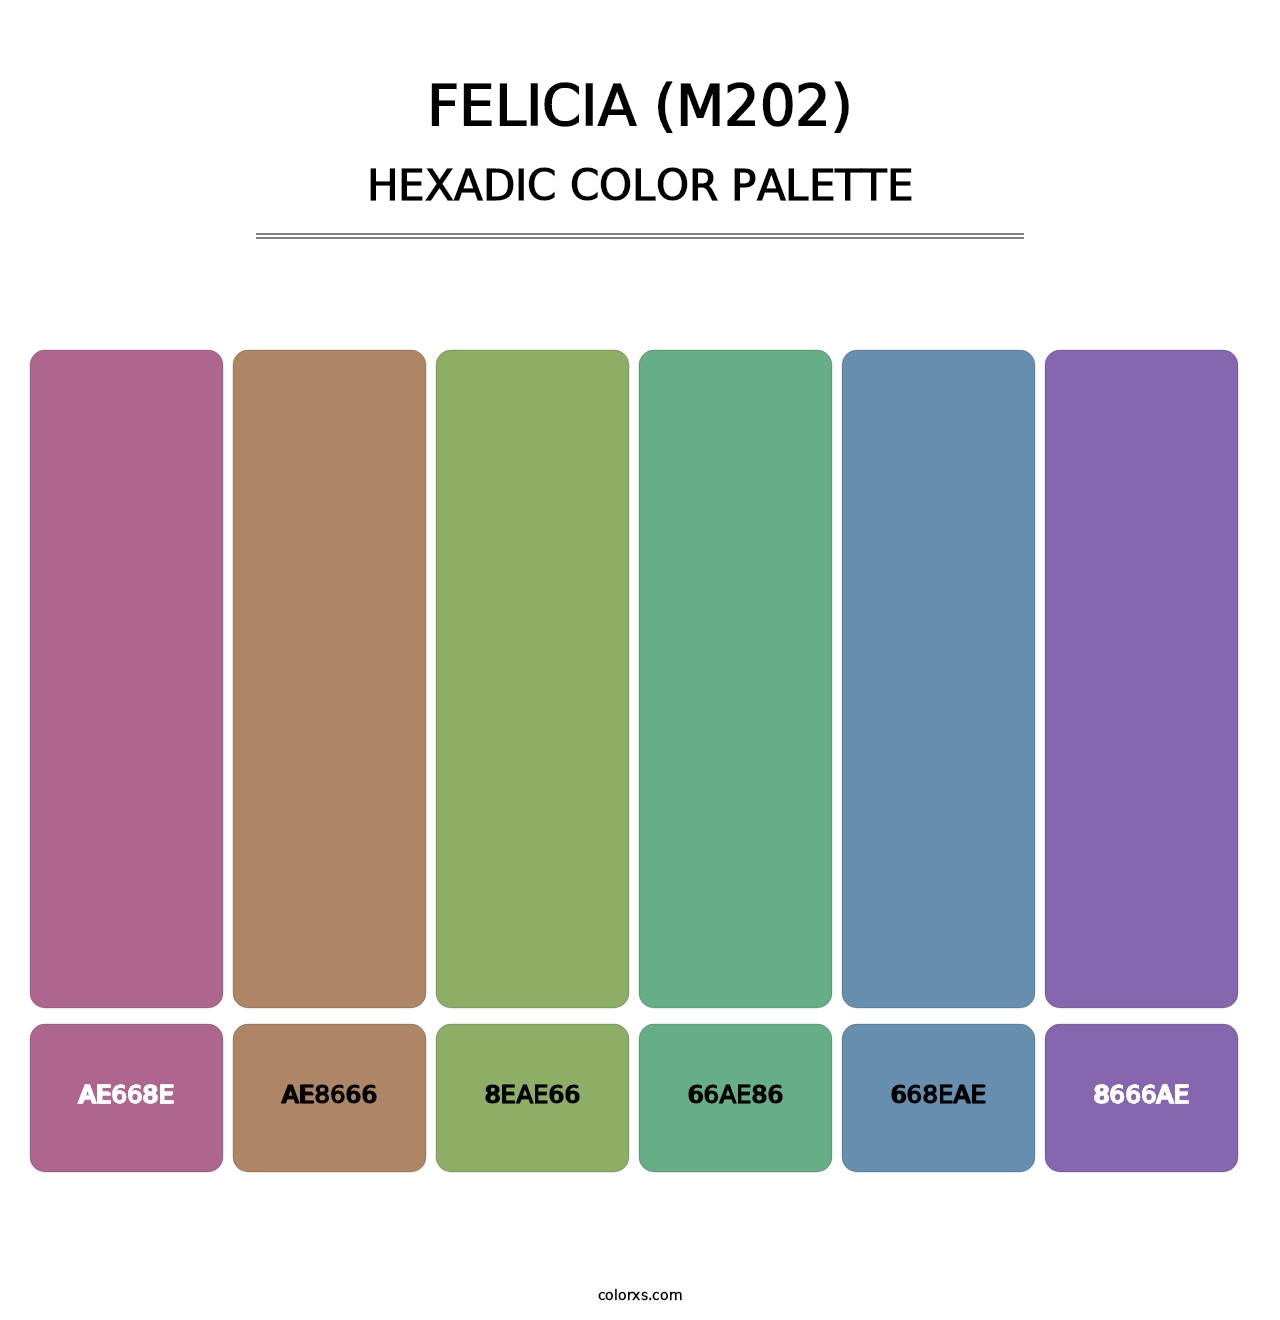 Felicia (M202) - Hexadic Color Palette